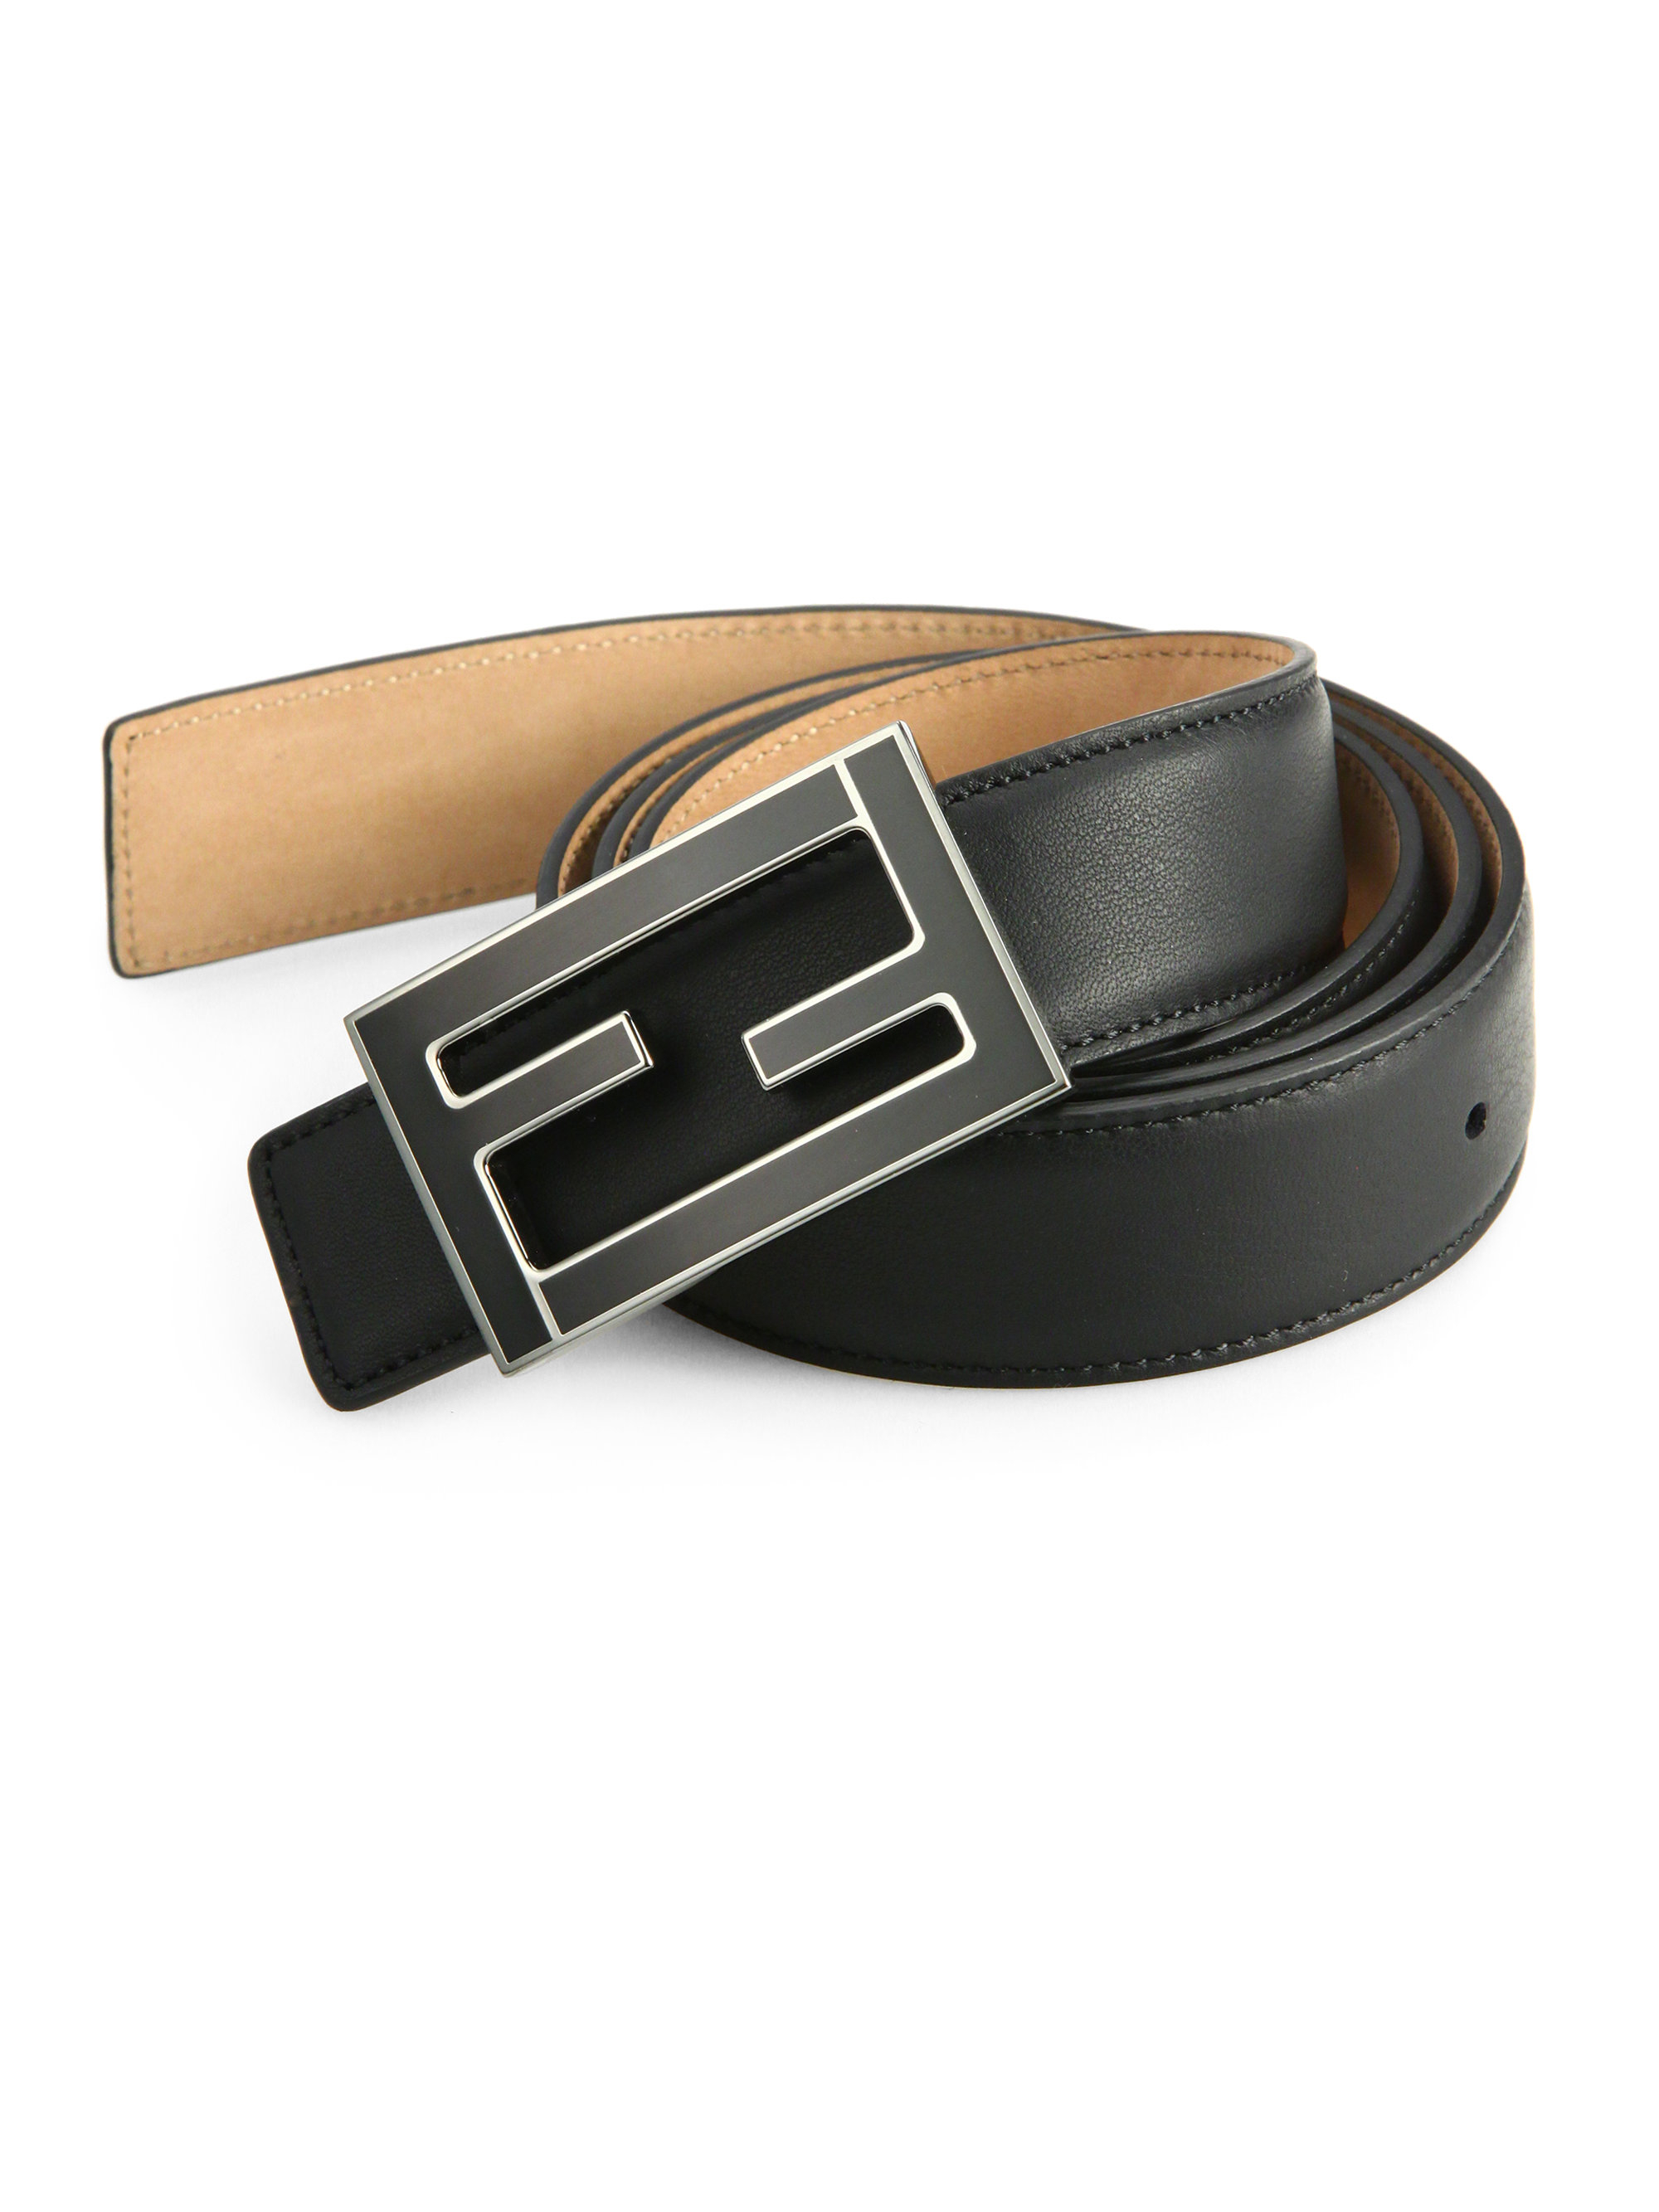 Lyst - Fendi Leather Logo Belt in Black for Men